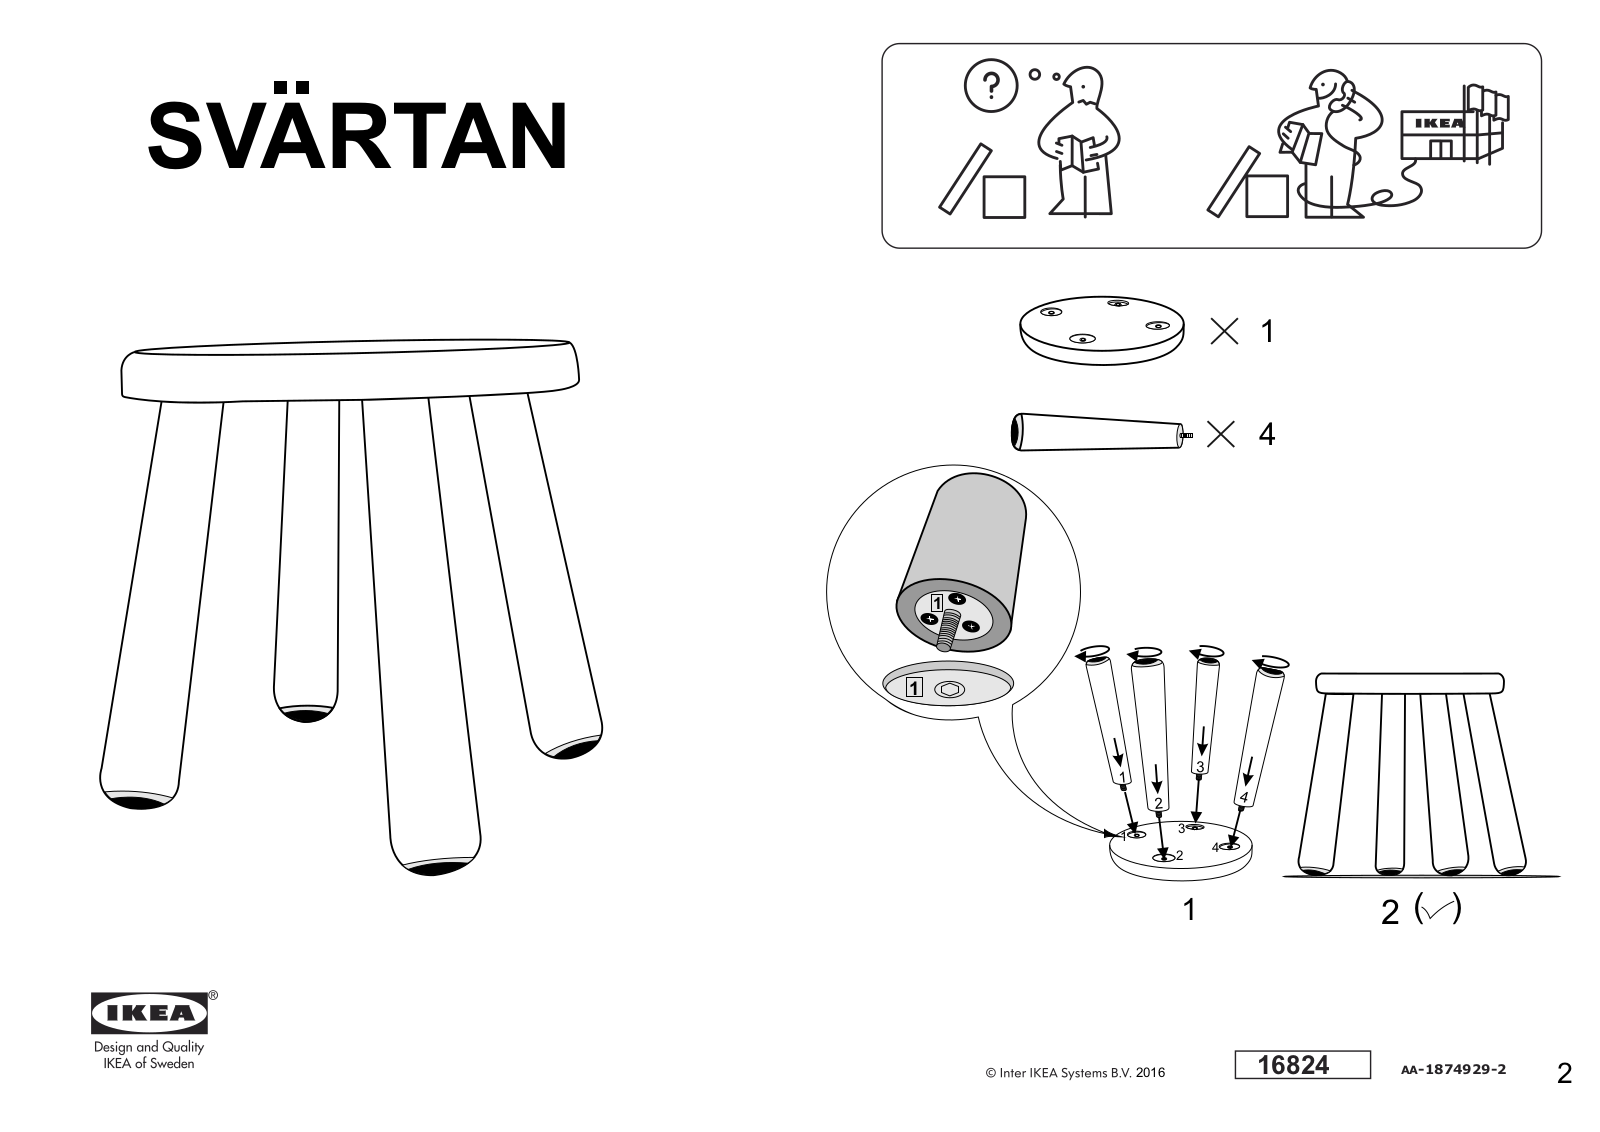 IKEA SVARTAN User Manual